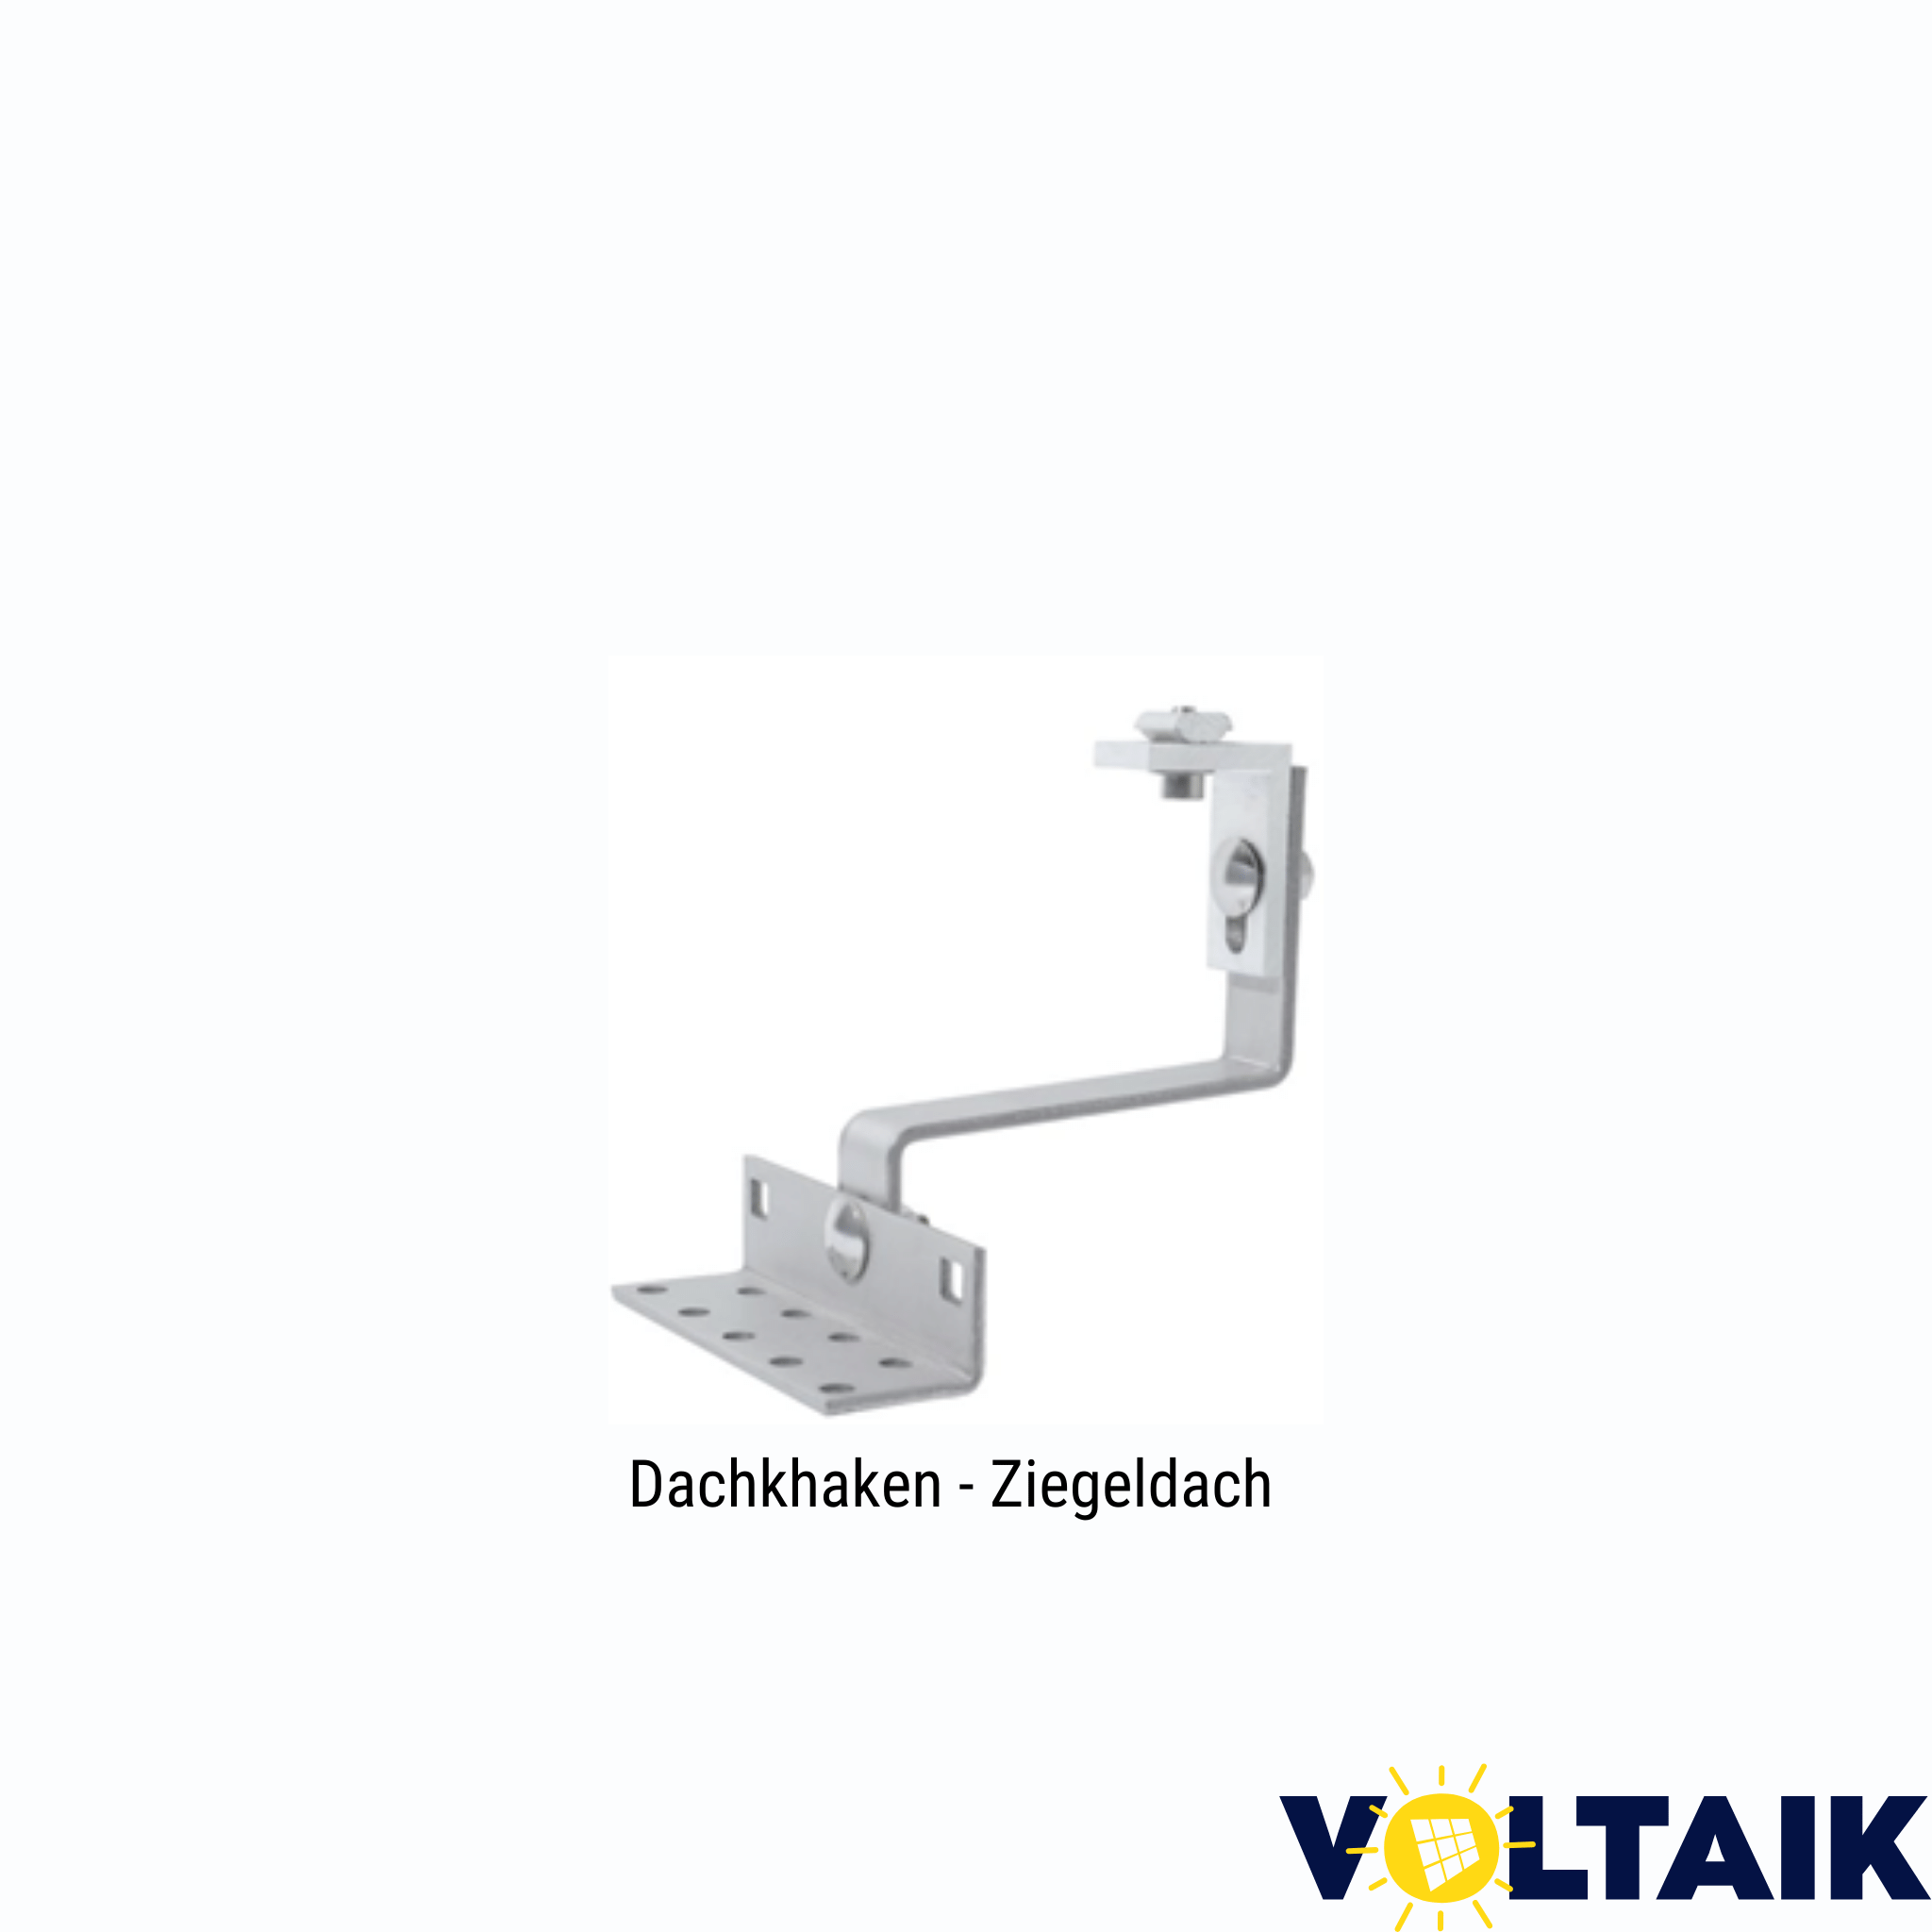 Dachhaken - Ziegeldach - Voltaik.shop